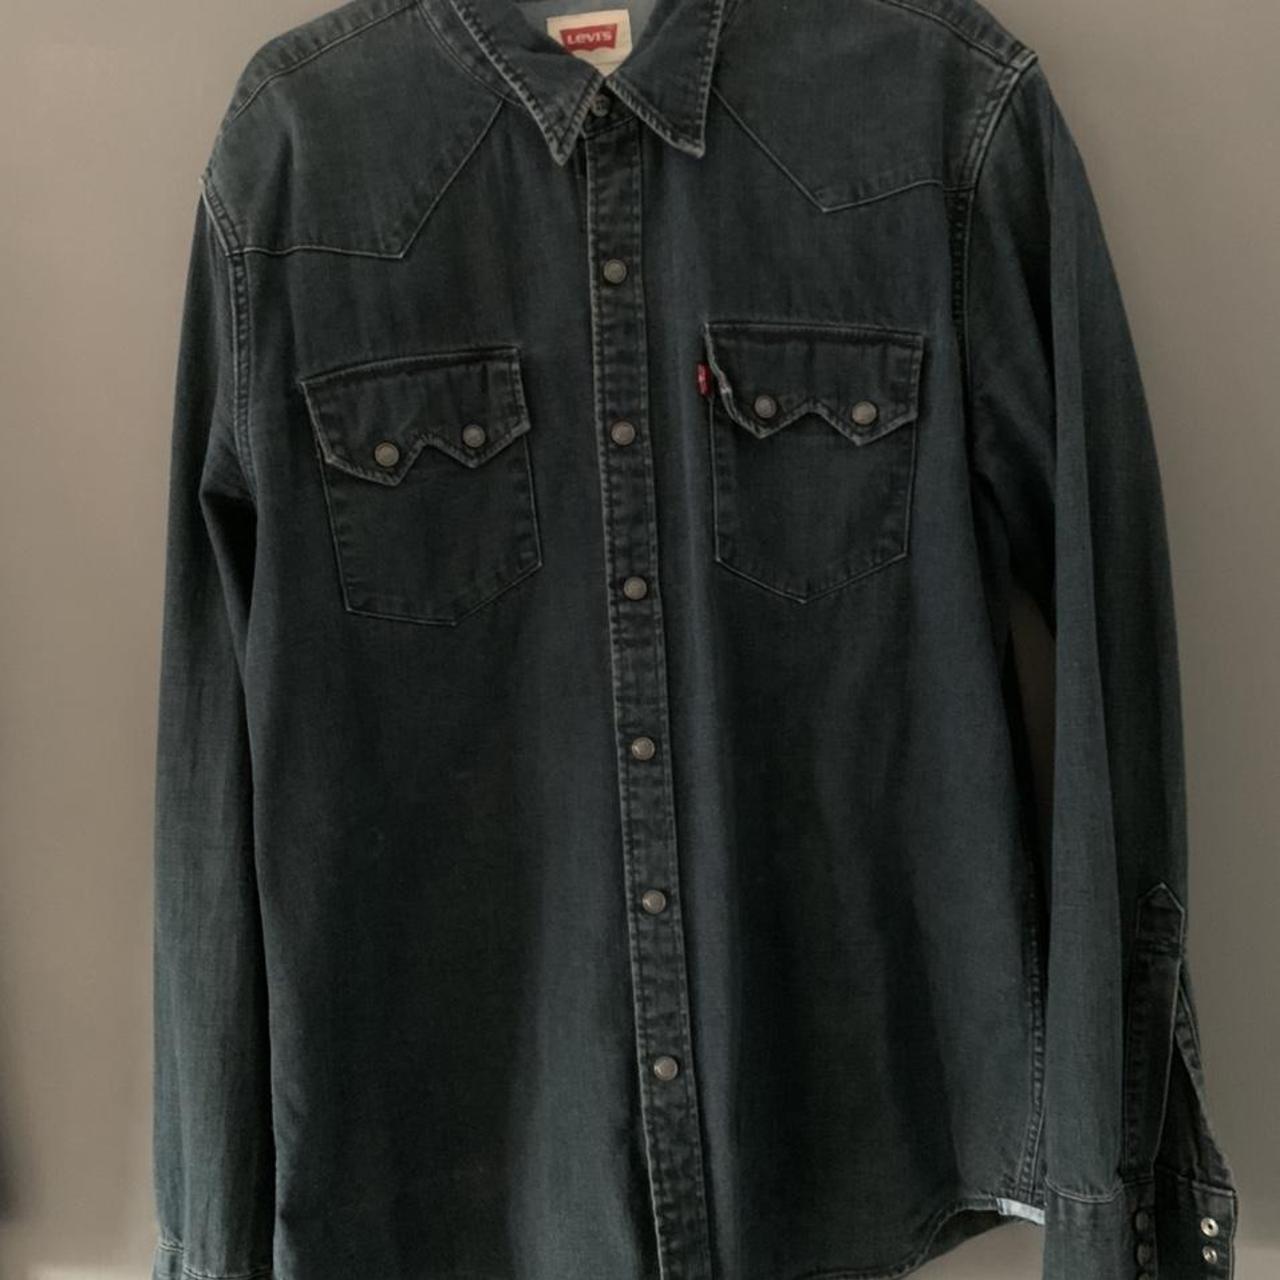 LEVIS VINTAGE CLOTHING 1955 Sawtooth Denim Shirt 07205-0027 RIGID リーバイス  ヴィンテージ /【Buyee】 Buyee - Japanese Proxy Service | Buy from Japan! bot-online